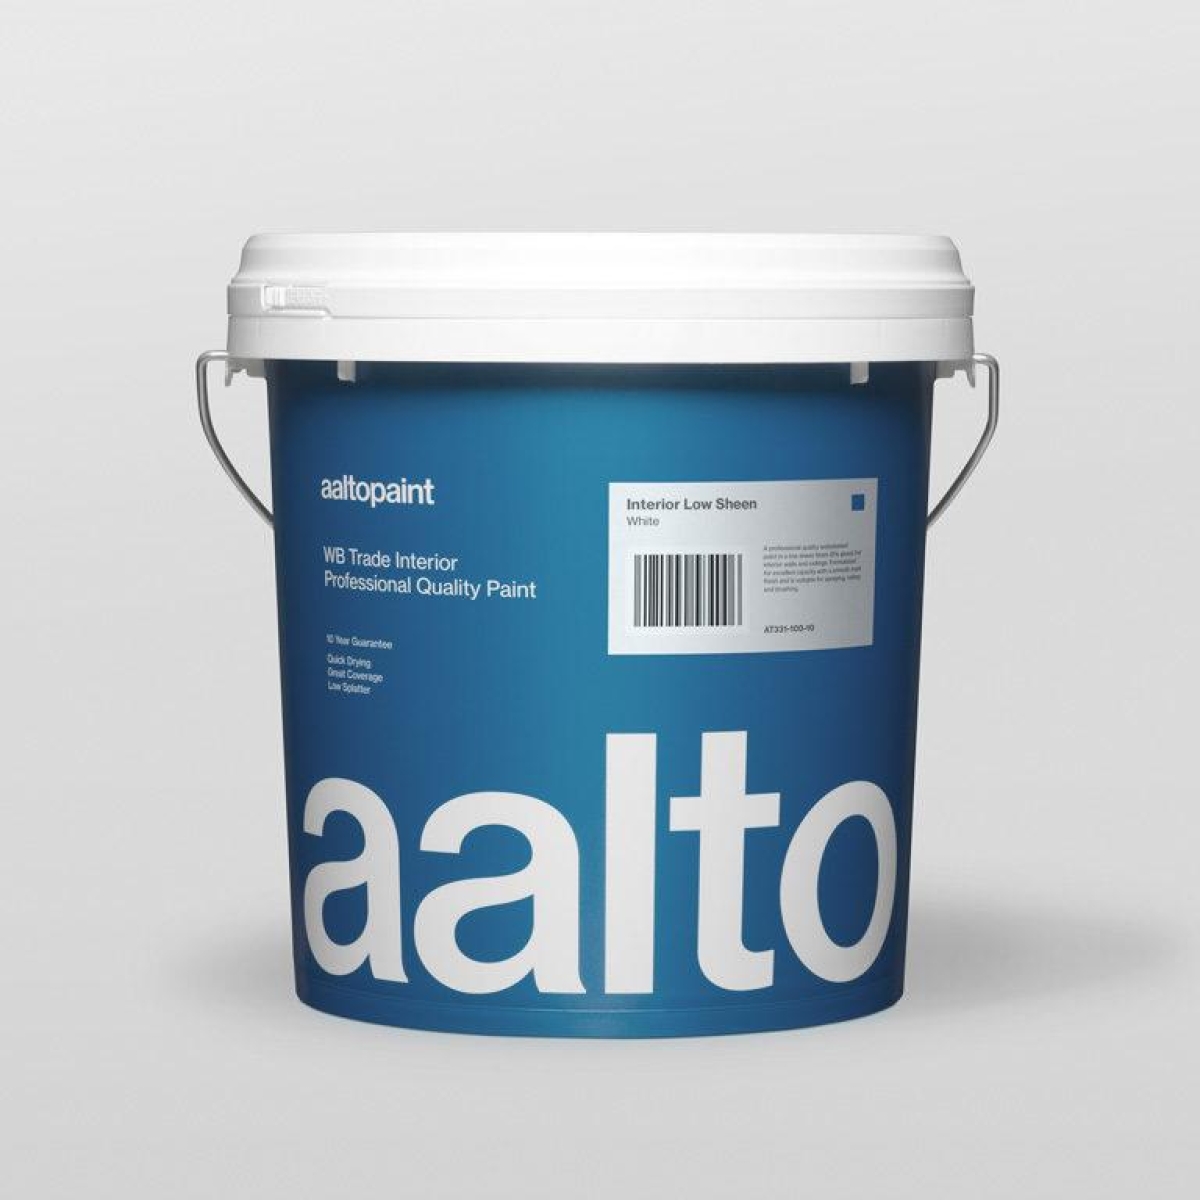 Aalto Paint Trade Interior Low Sheen